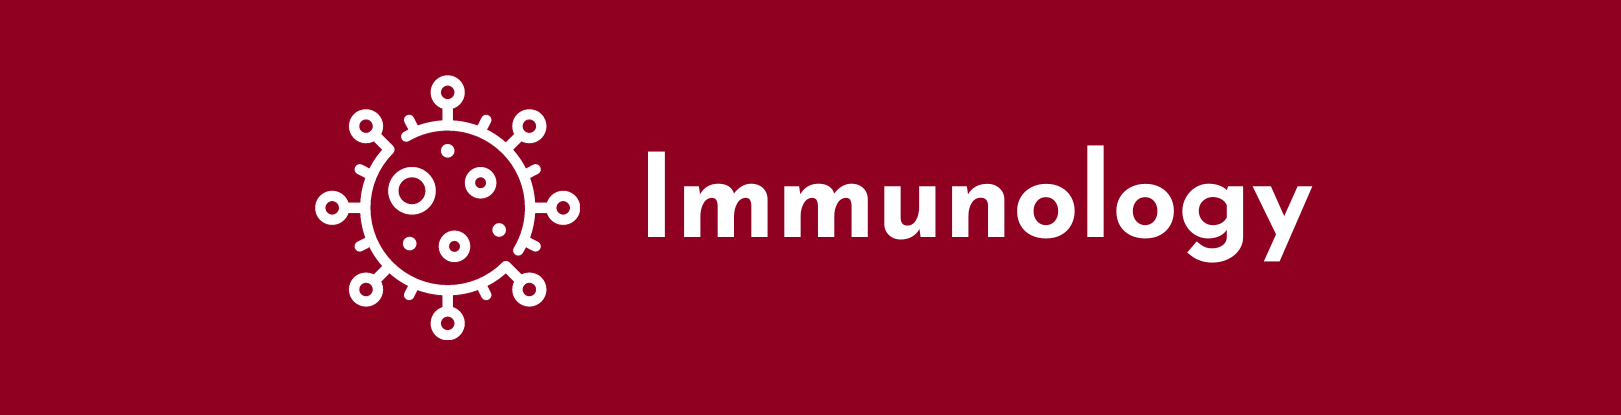 Immunology Program